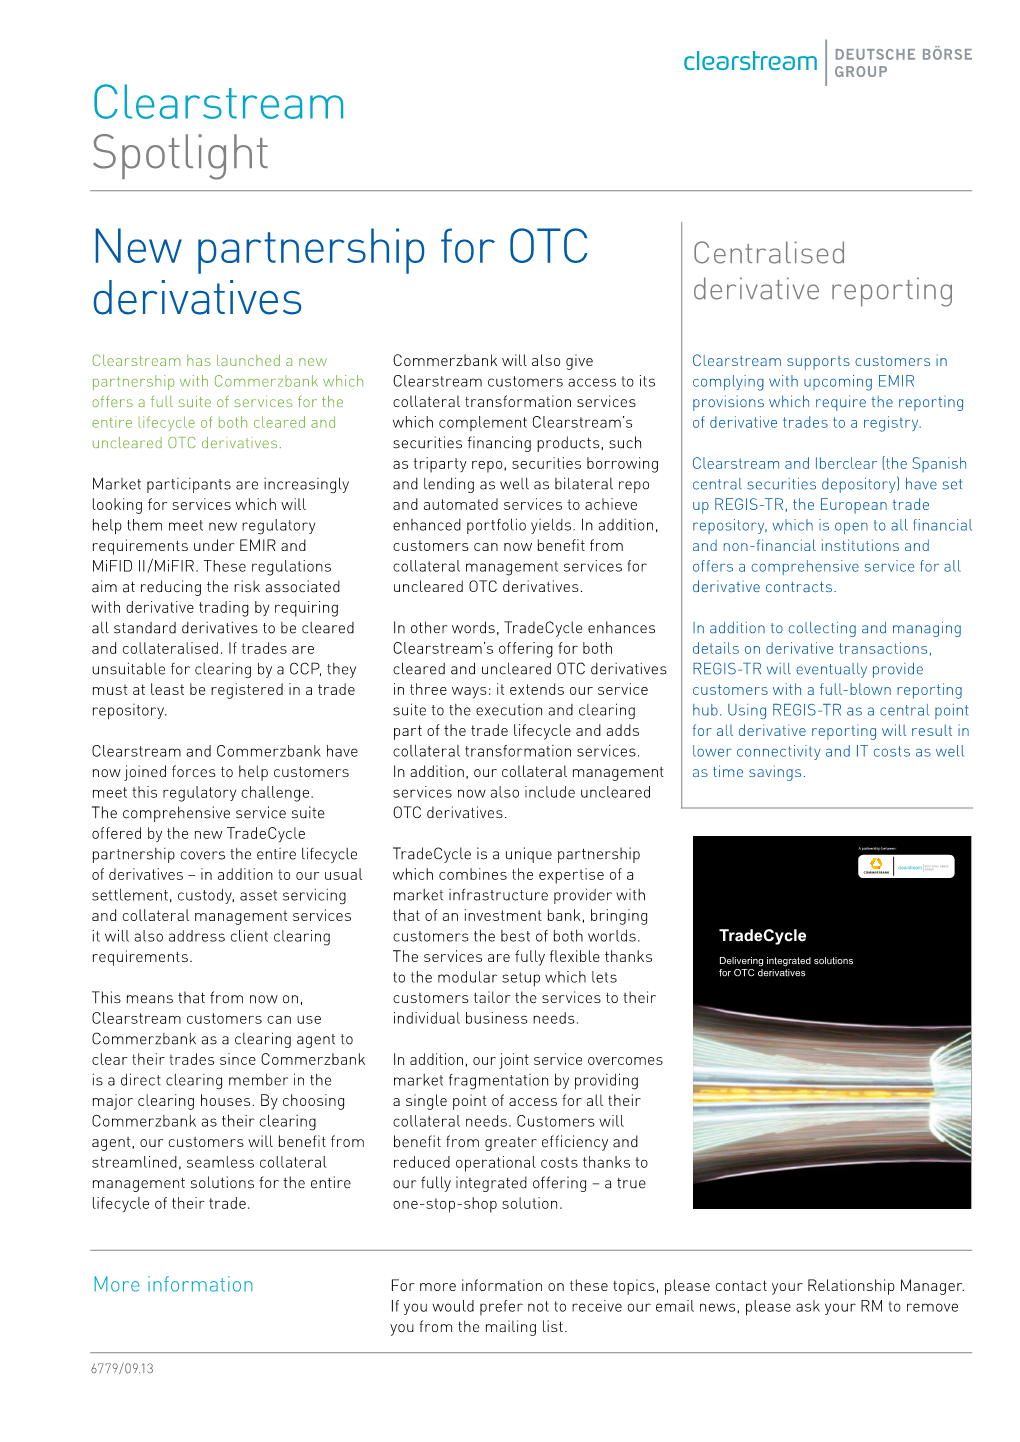 New Partnership for OTC Derivatives Clearstream Spotlight